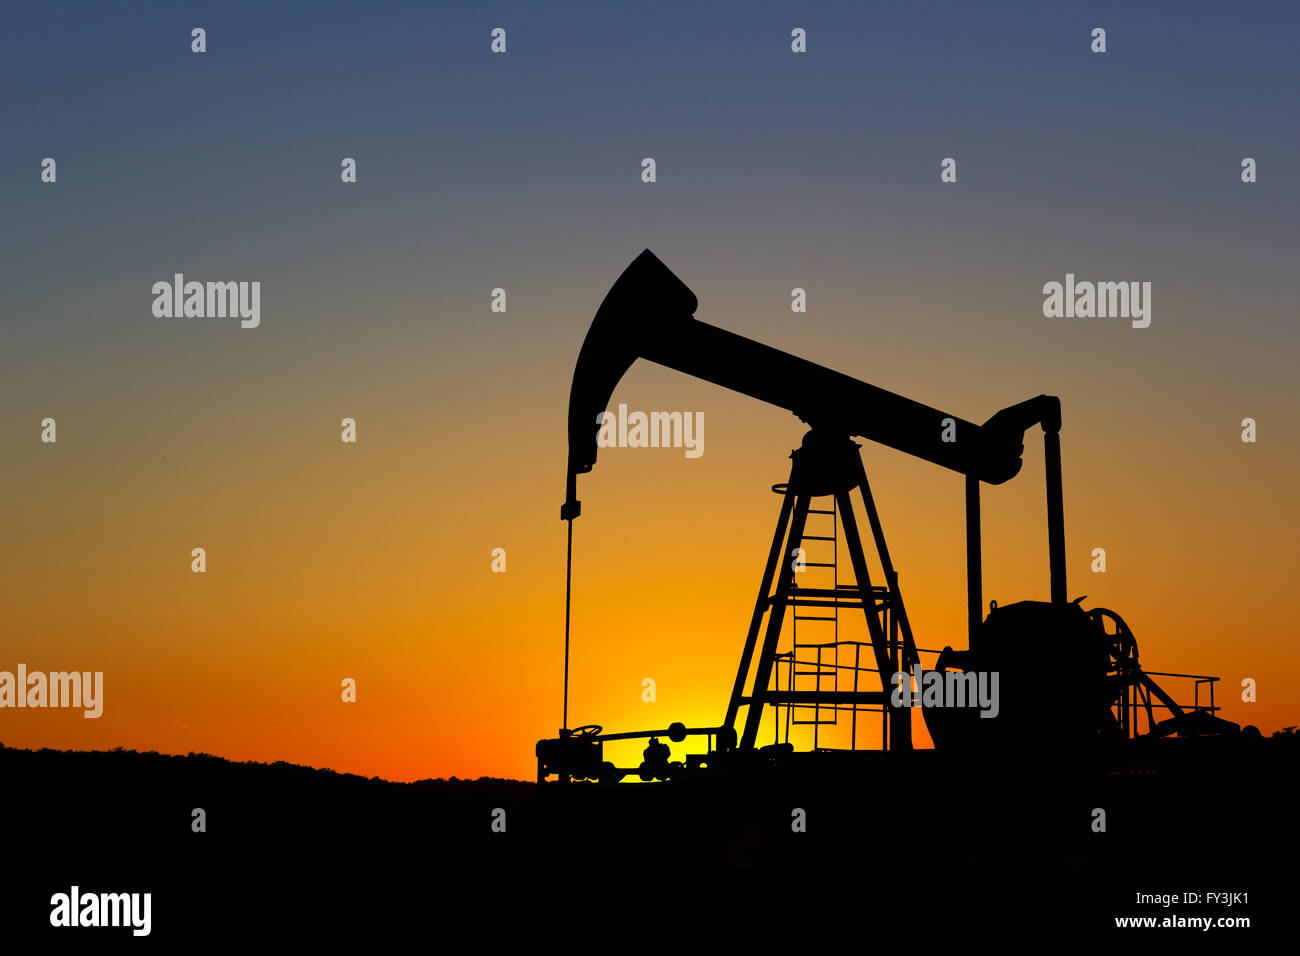 Oil pump silhouette over sunset sky Stock Photo